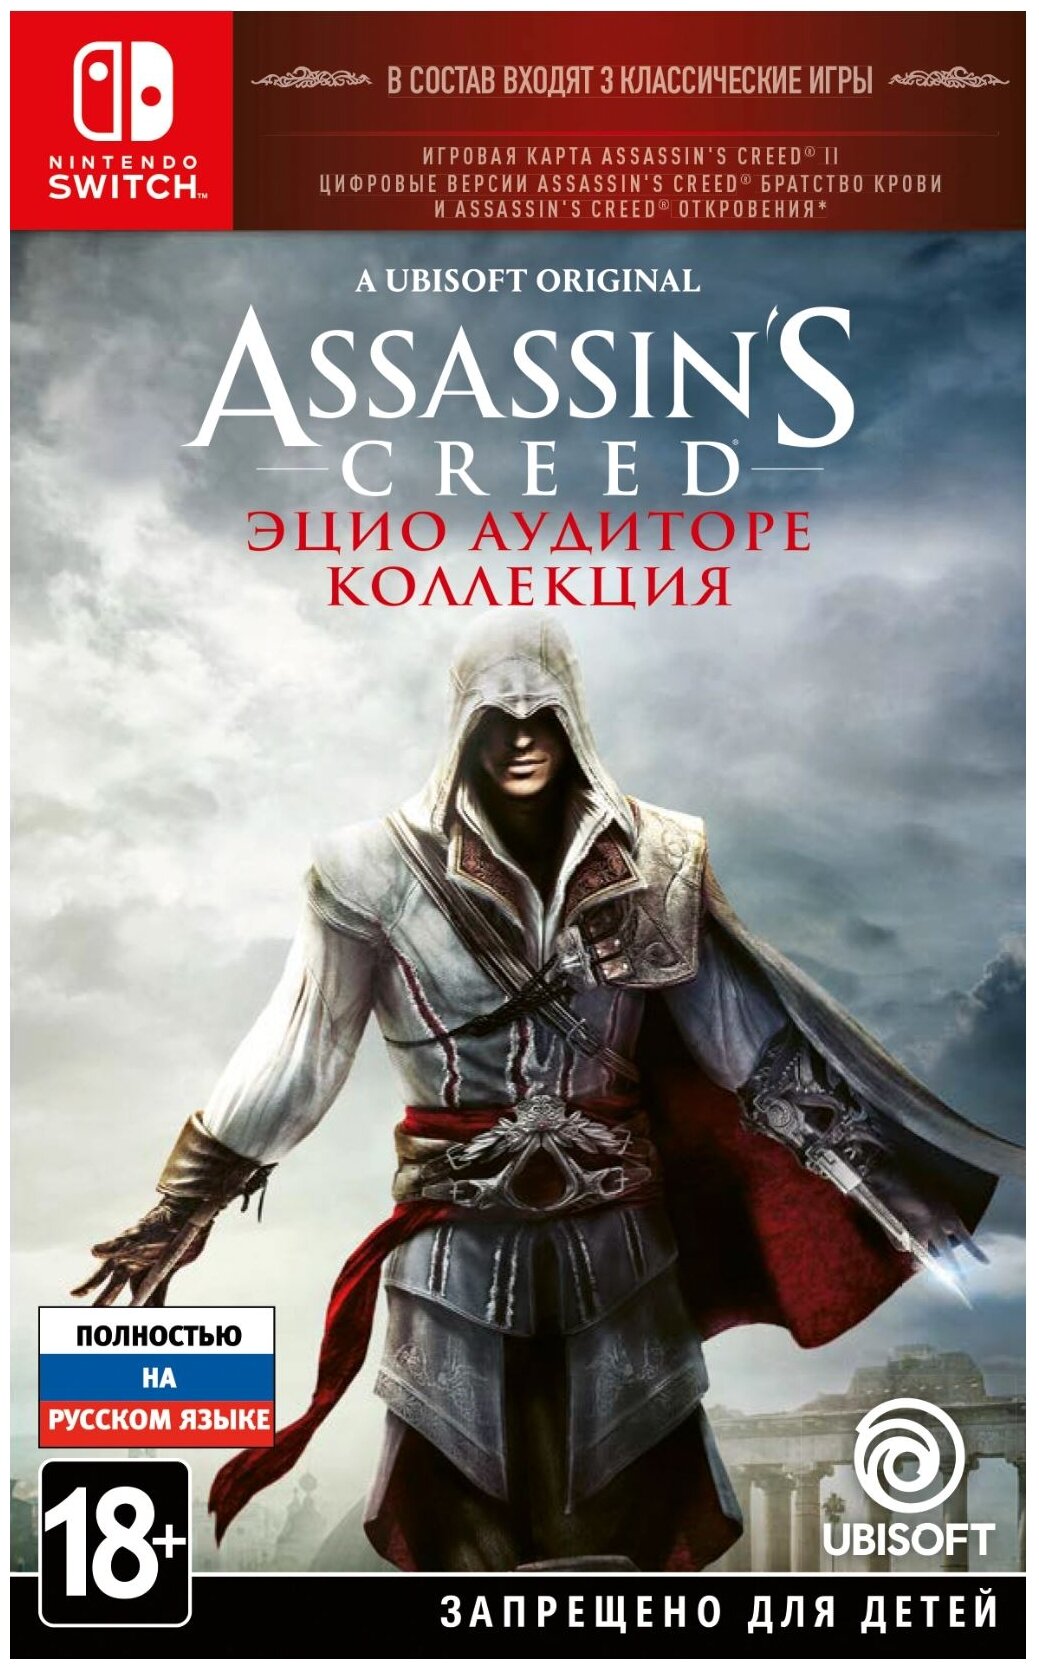 Assassin's Creed: The Ezio Collection (Коллекция Эцио Аудиторе) Русская версия (Switch)